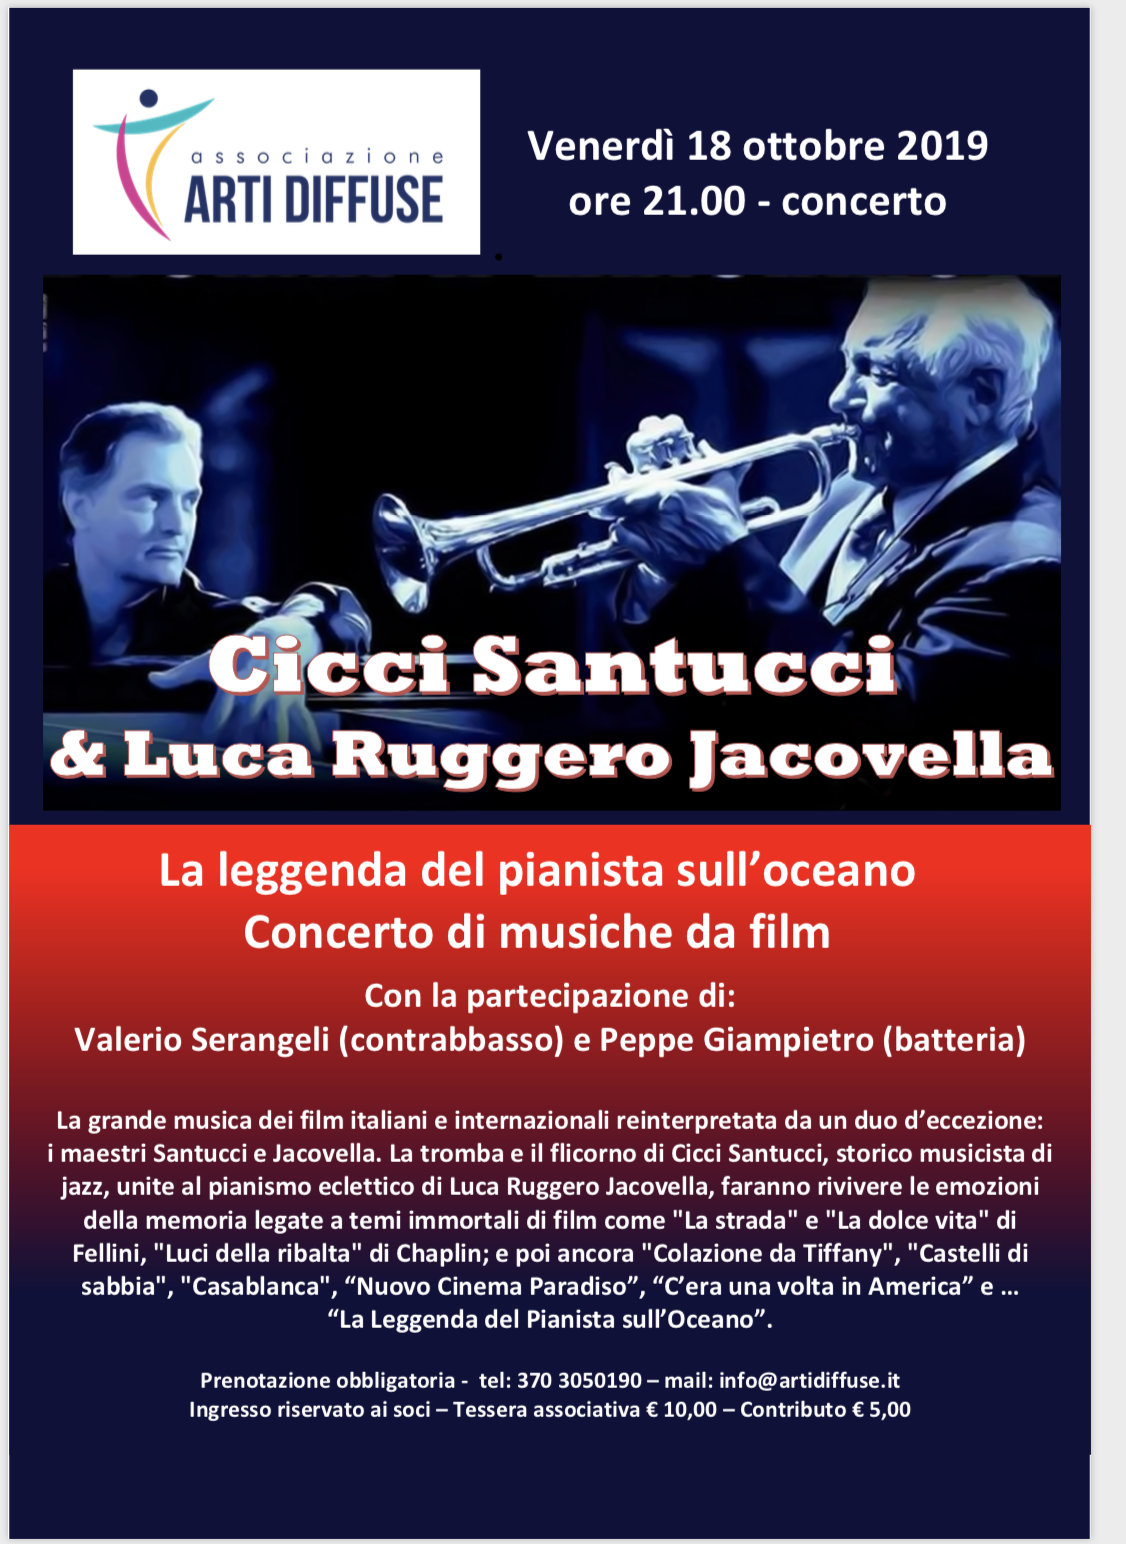 Cicci Santucci & Luca Ruggero Jacovella